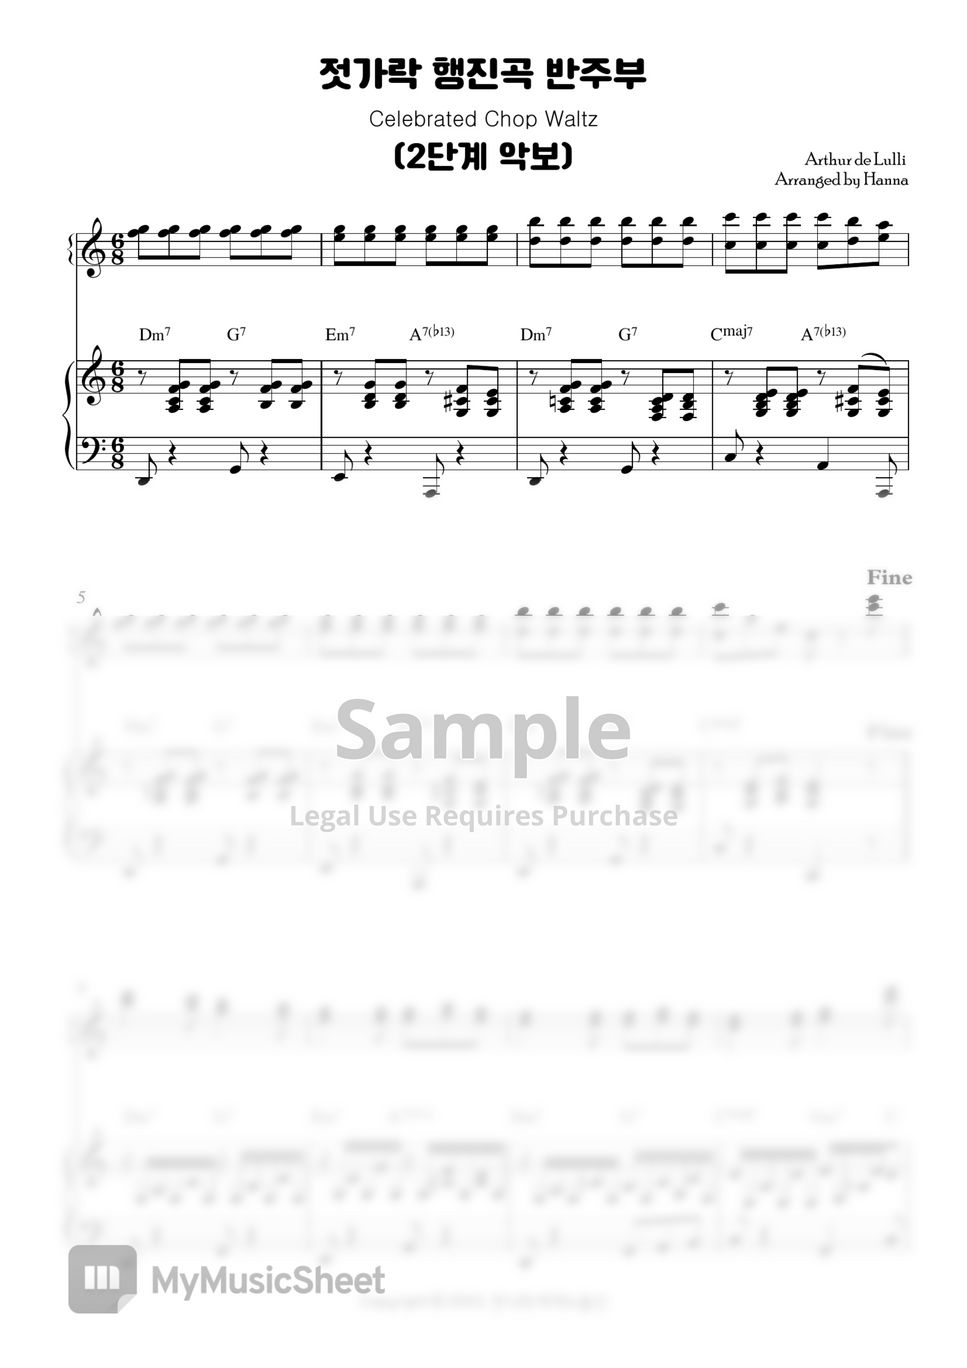 Arthur de Lulli - ﻿Celebrated Chop Waltz(젓가락 행진곡) (Step1~3 Acomp.) by Hanna